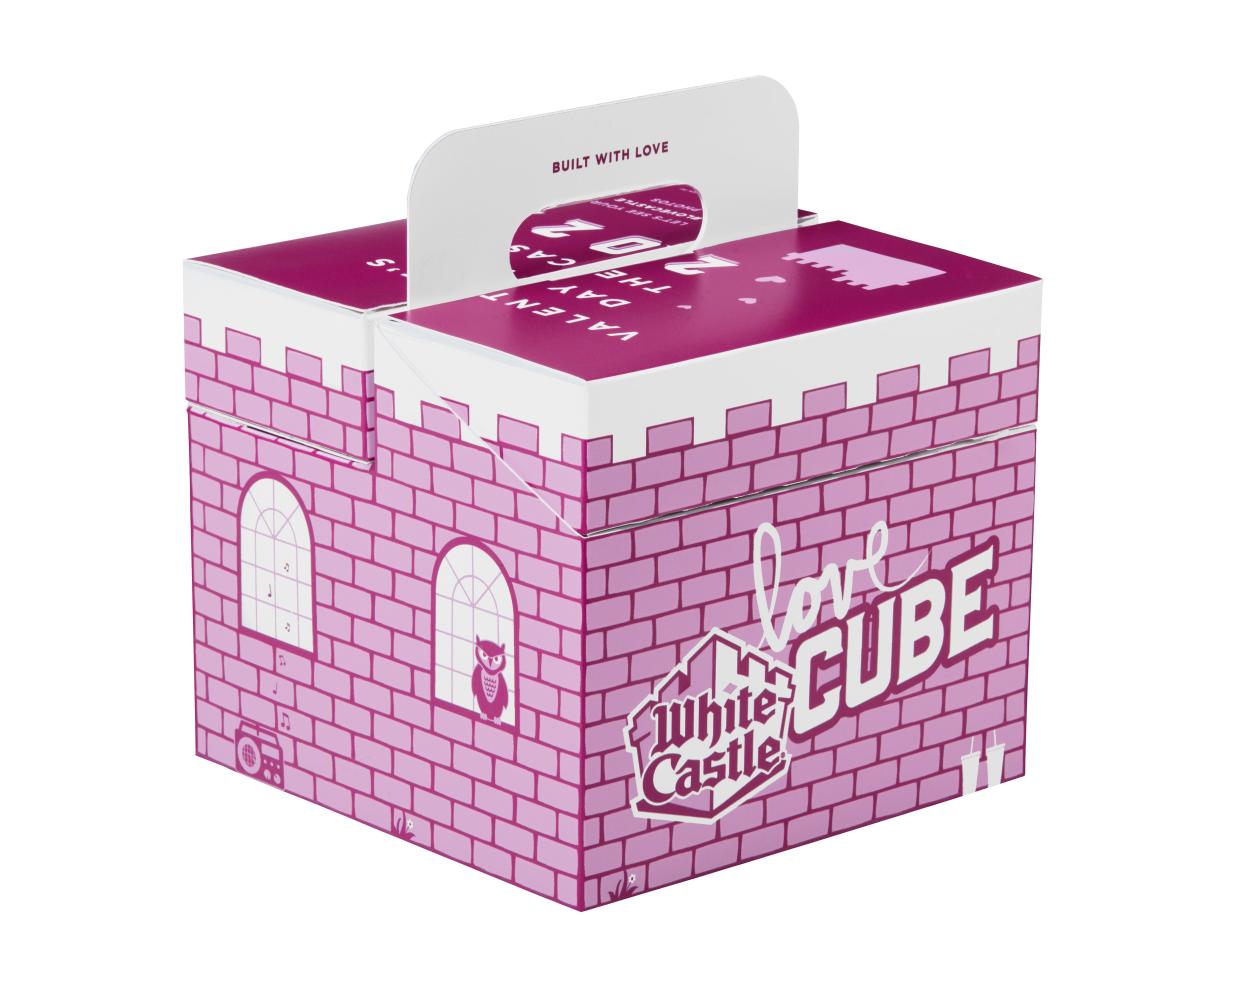 White Castle love cube